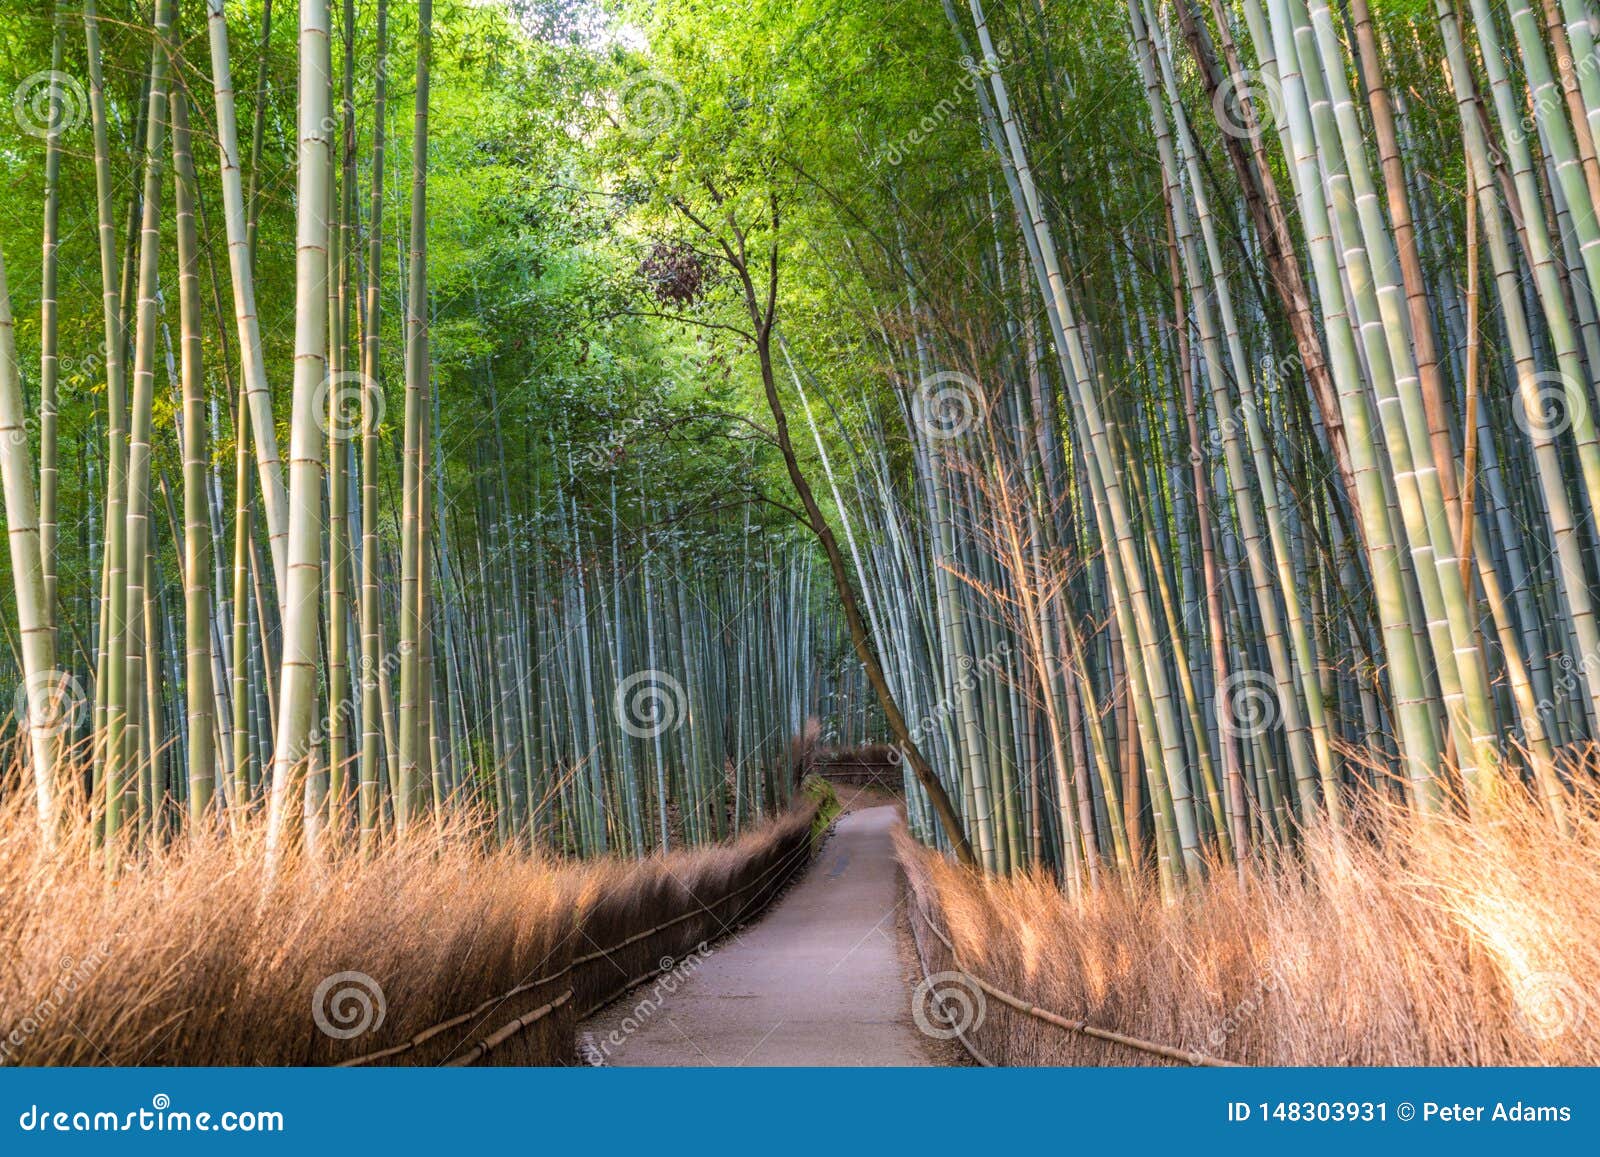 path through bamboo forest at sagano, arashiyama, kyoto